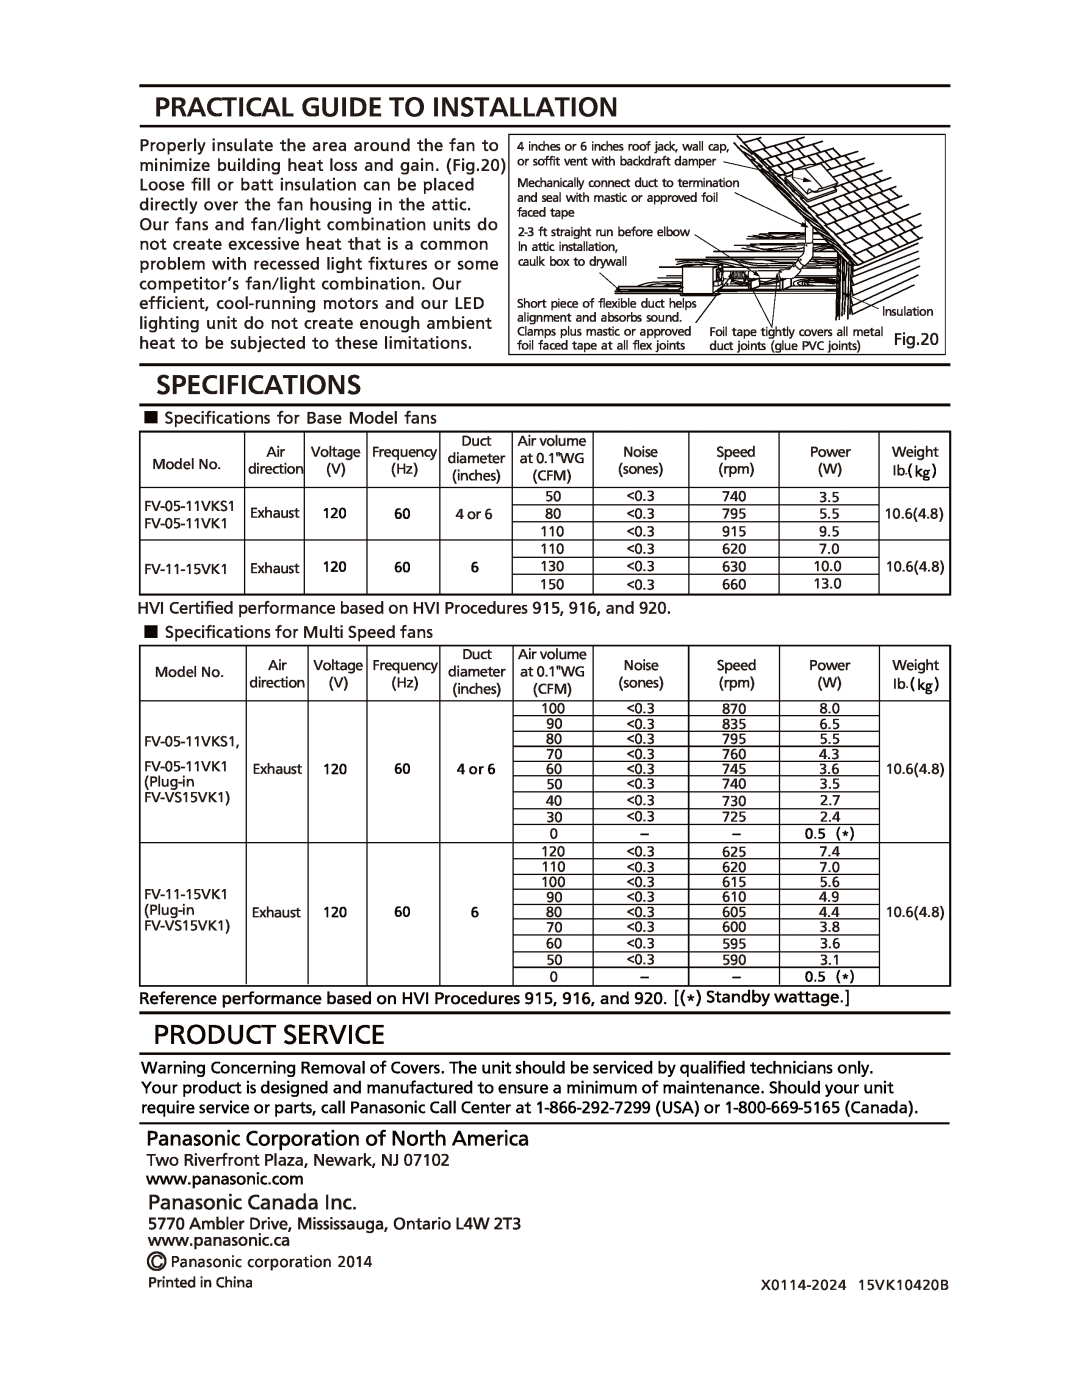 Panasonic FV-11-15VK1, FV-05-11VKS1, FV-05-11VK1 dimensions Practical Guide To Installation, Specifications 